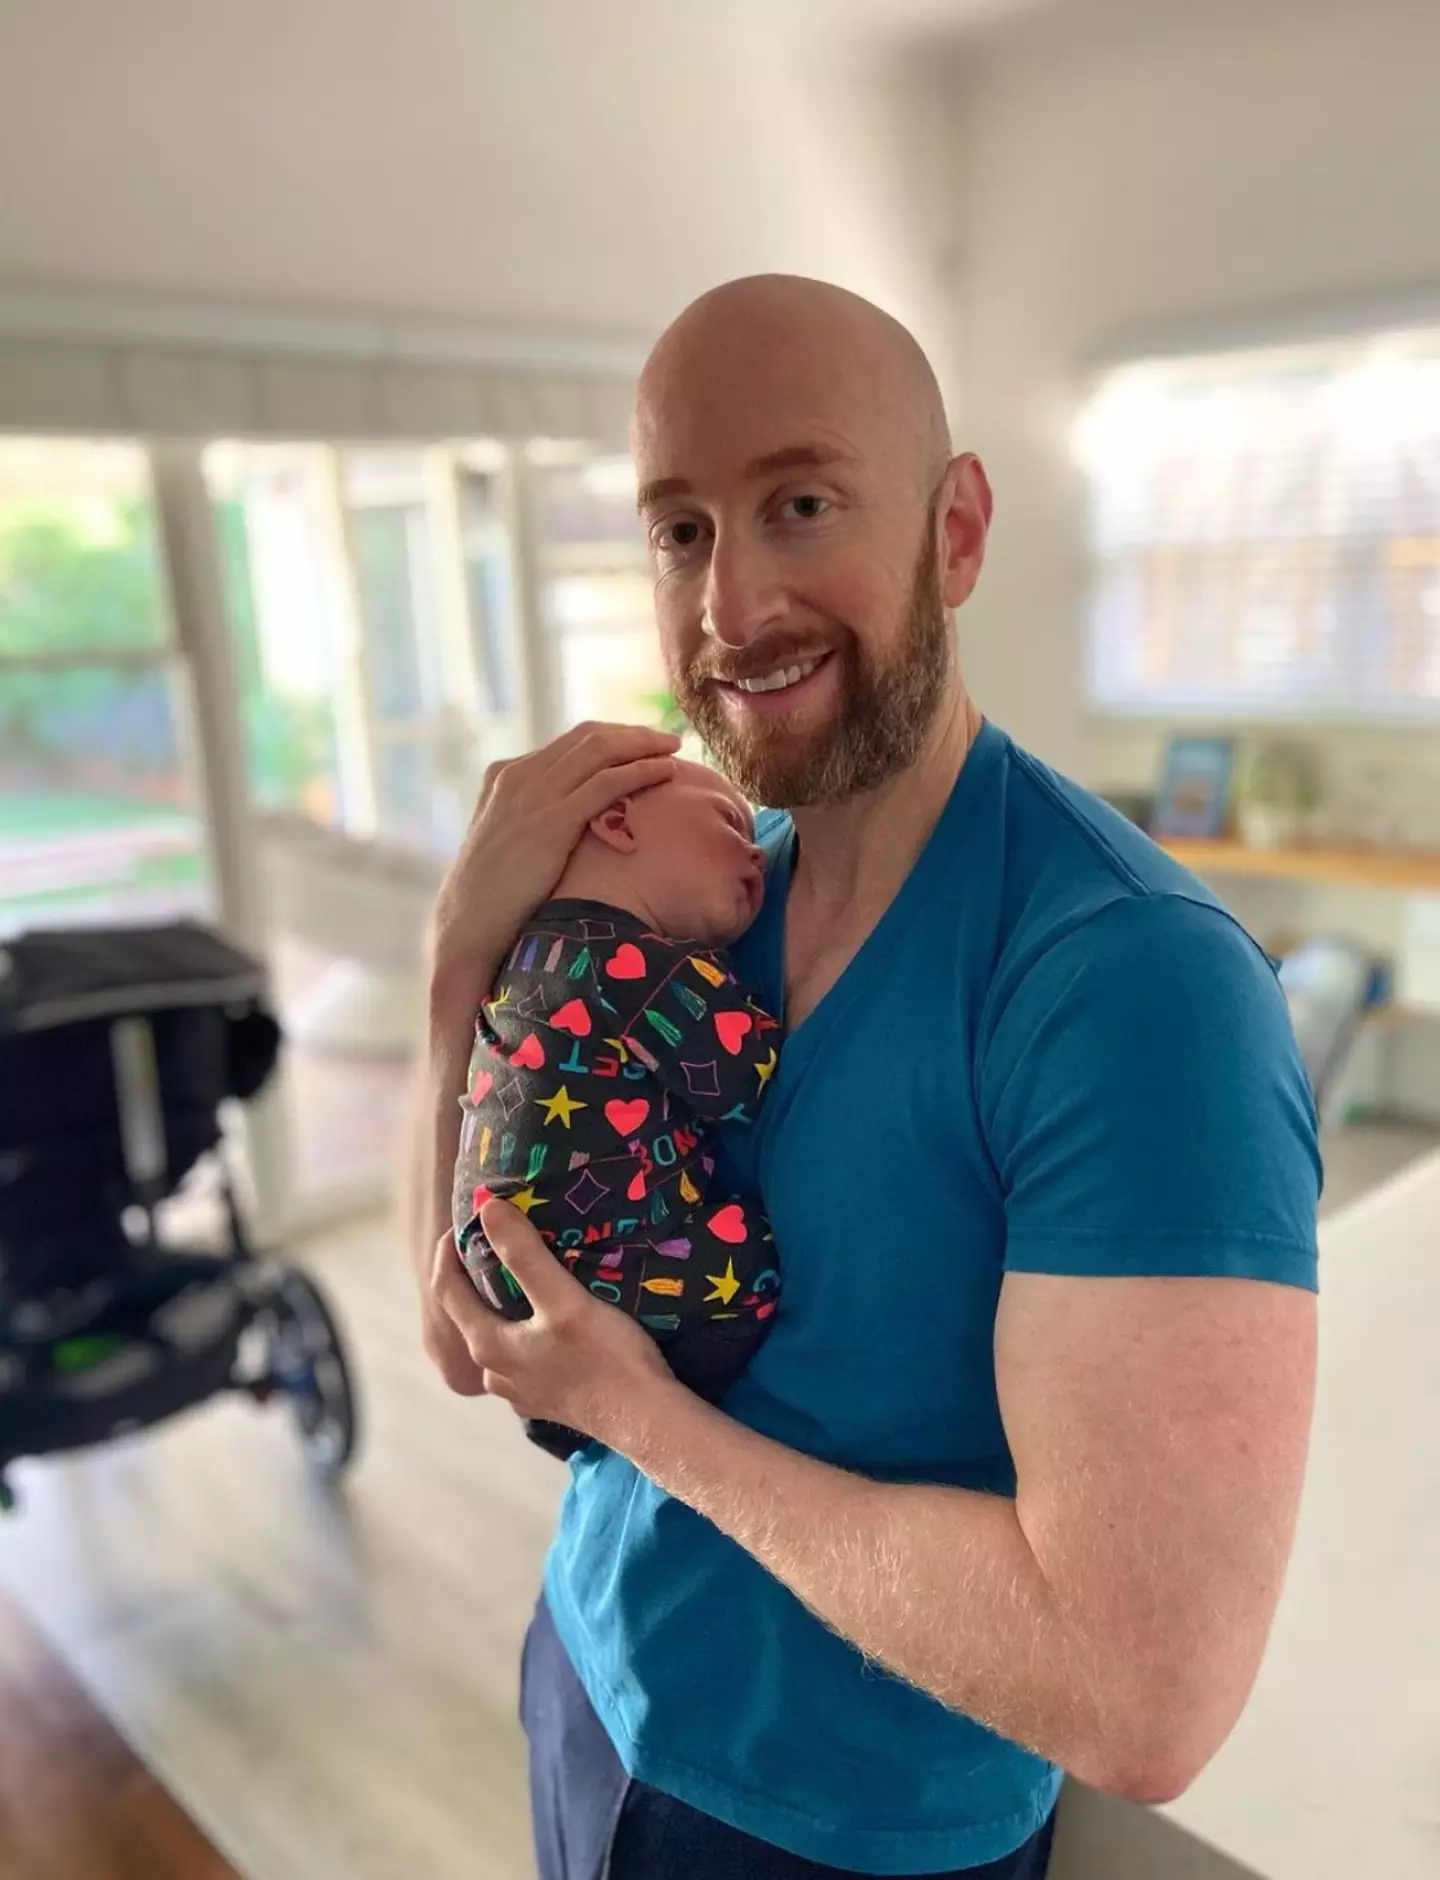 Shaun Resnik gave birth to his son via surrogate last year.